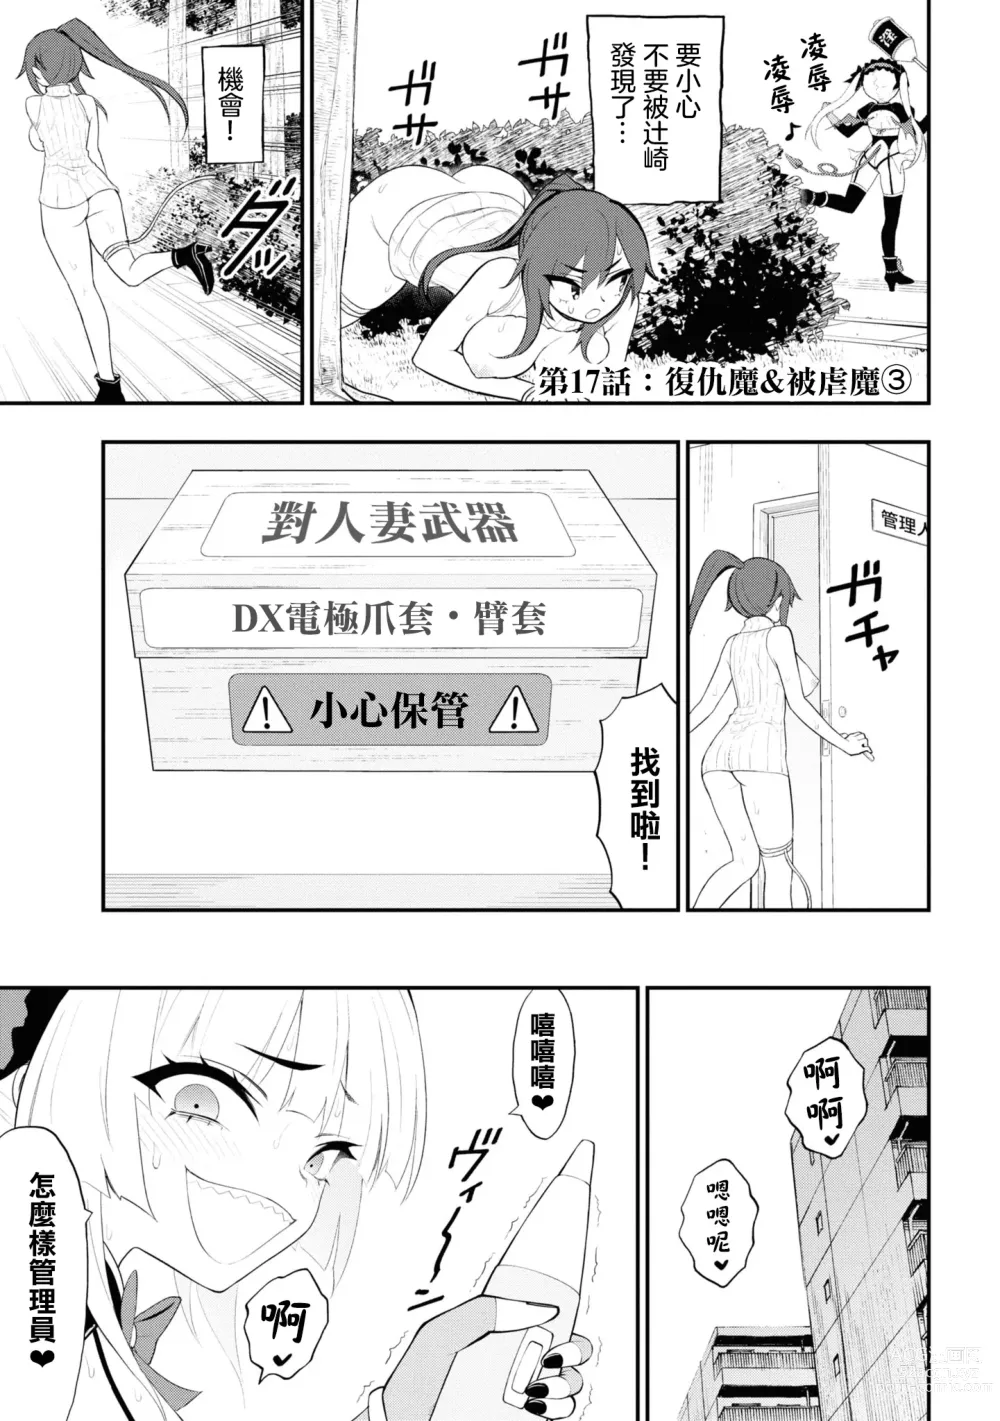 Page 45 of manga 淫獄小區 15-17話